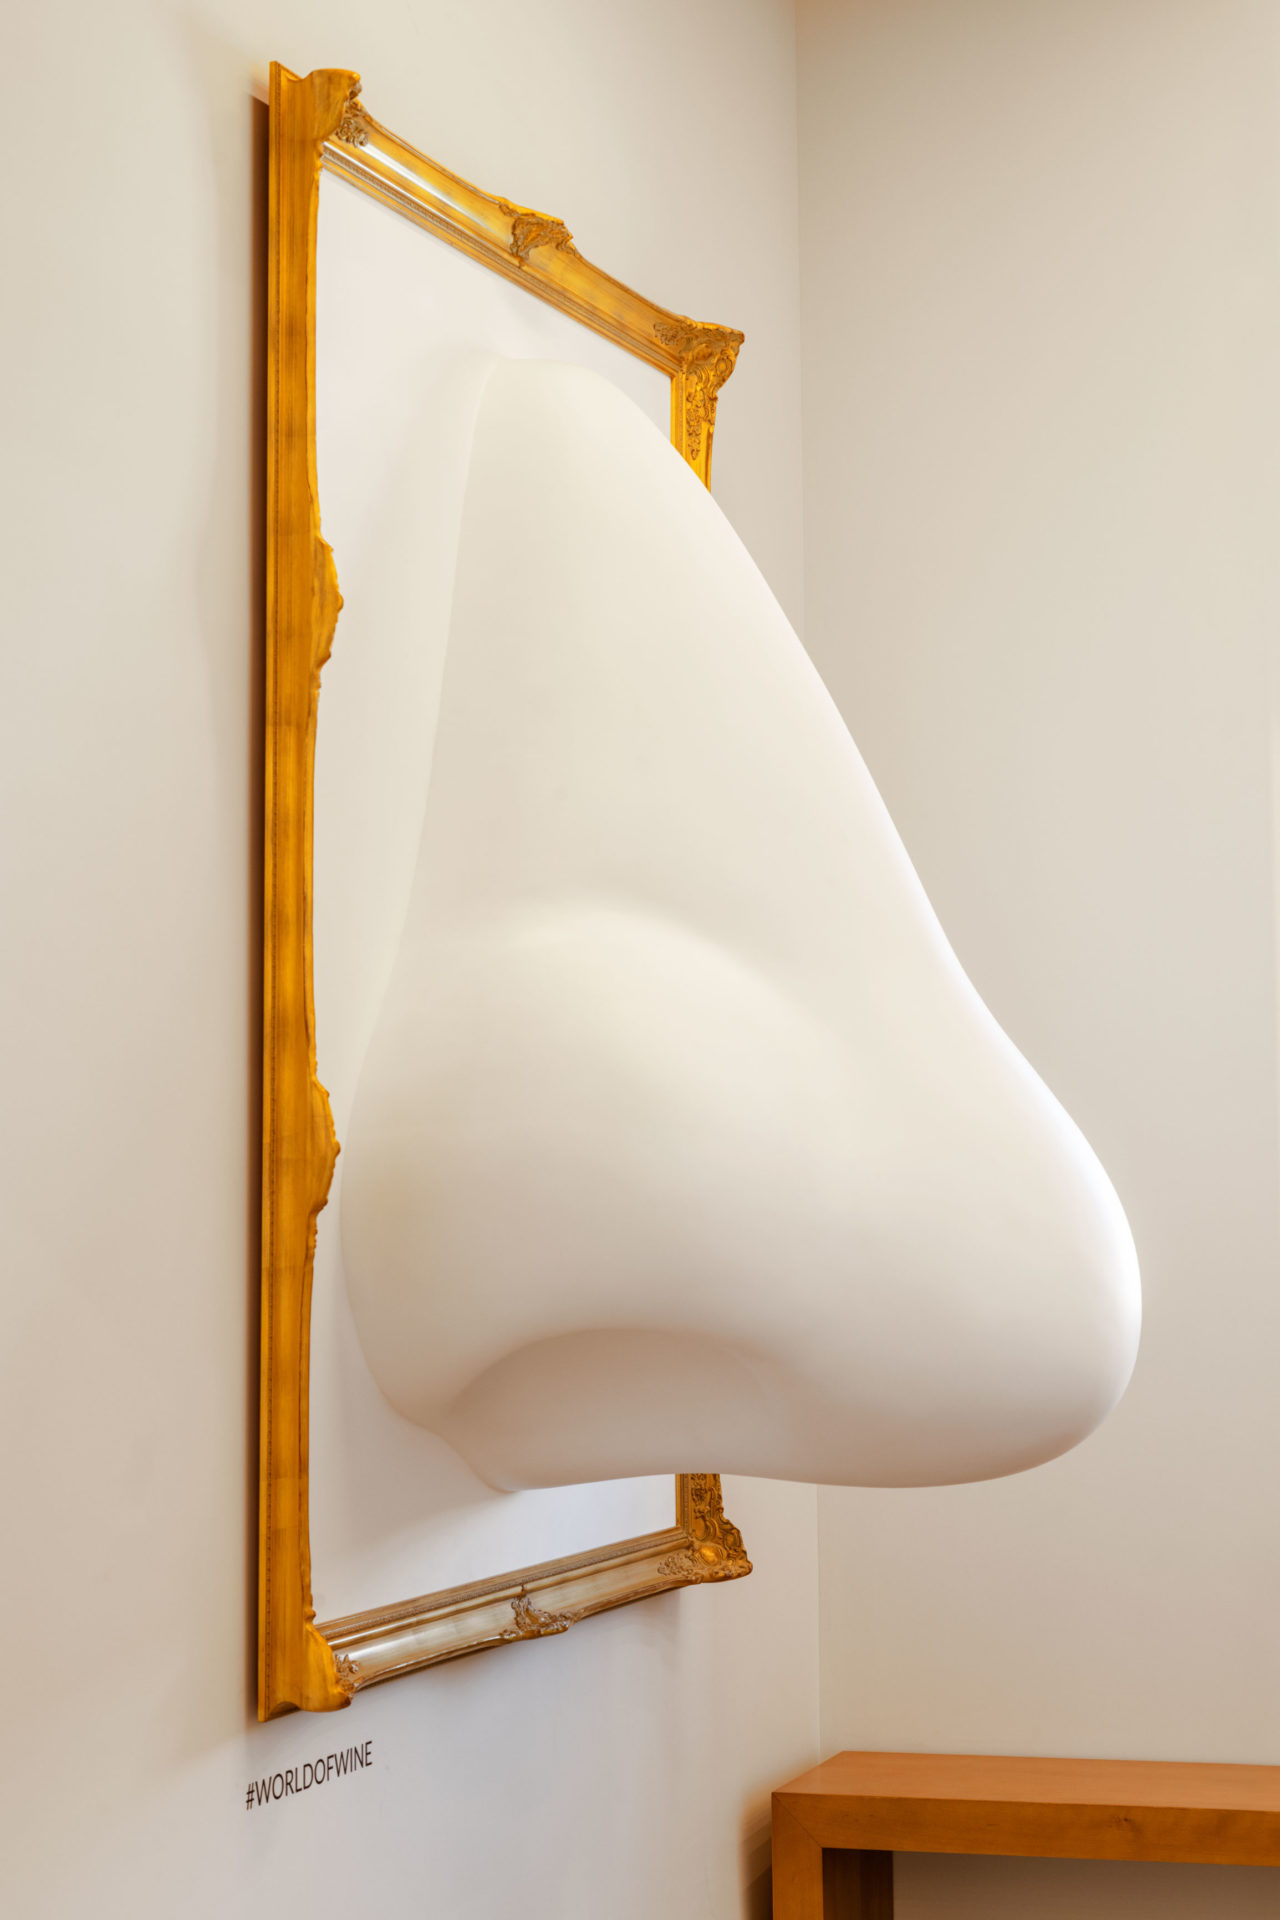 A nose sculpture in a frame.